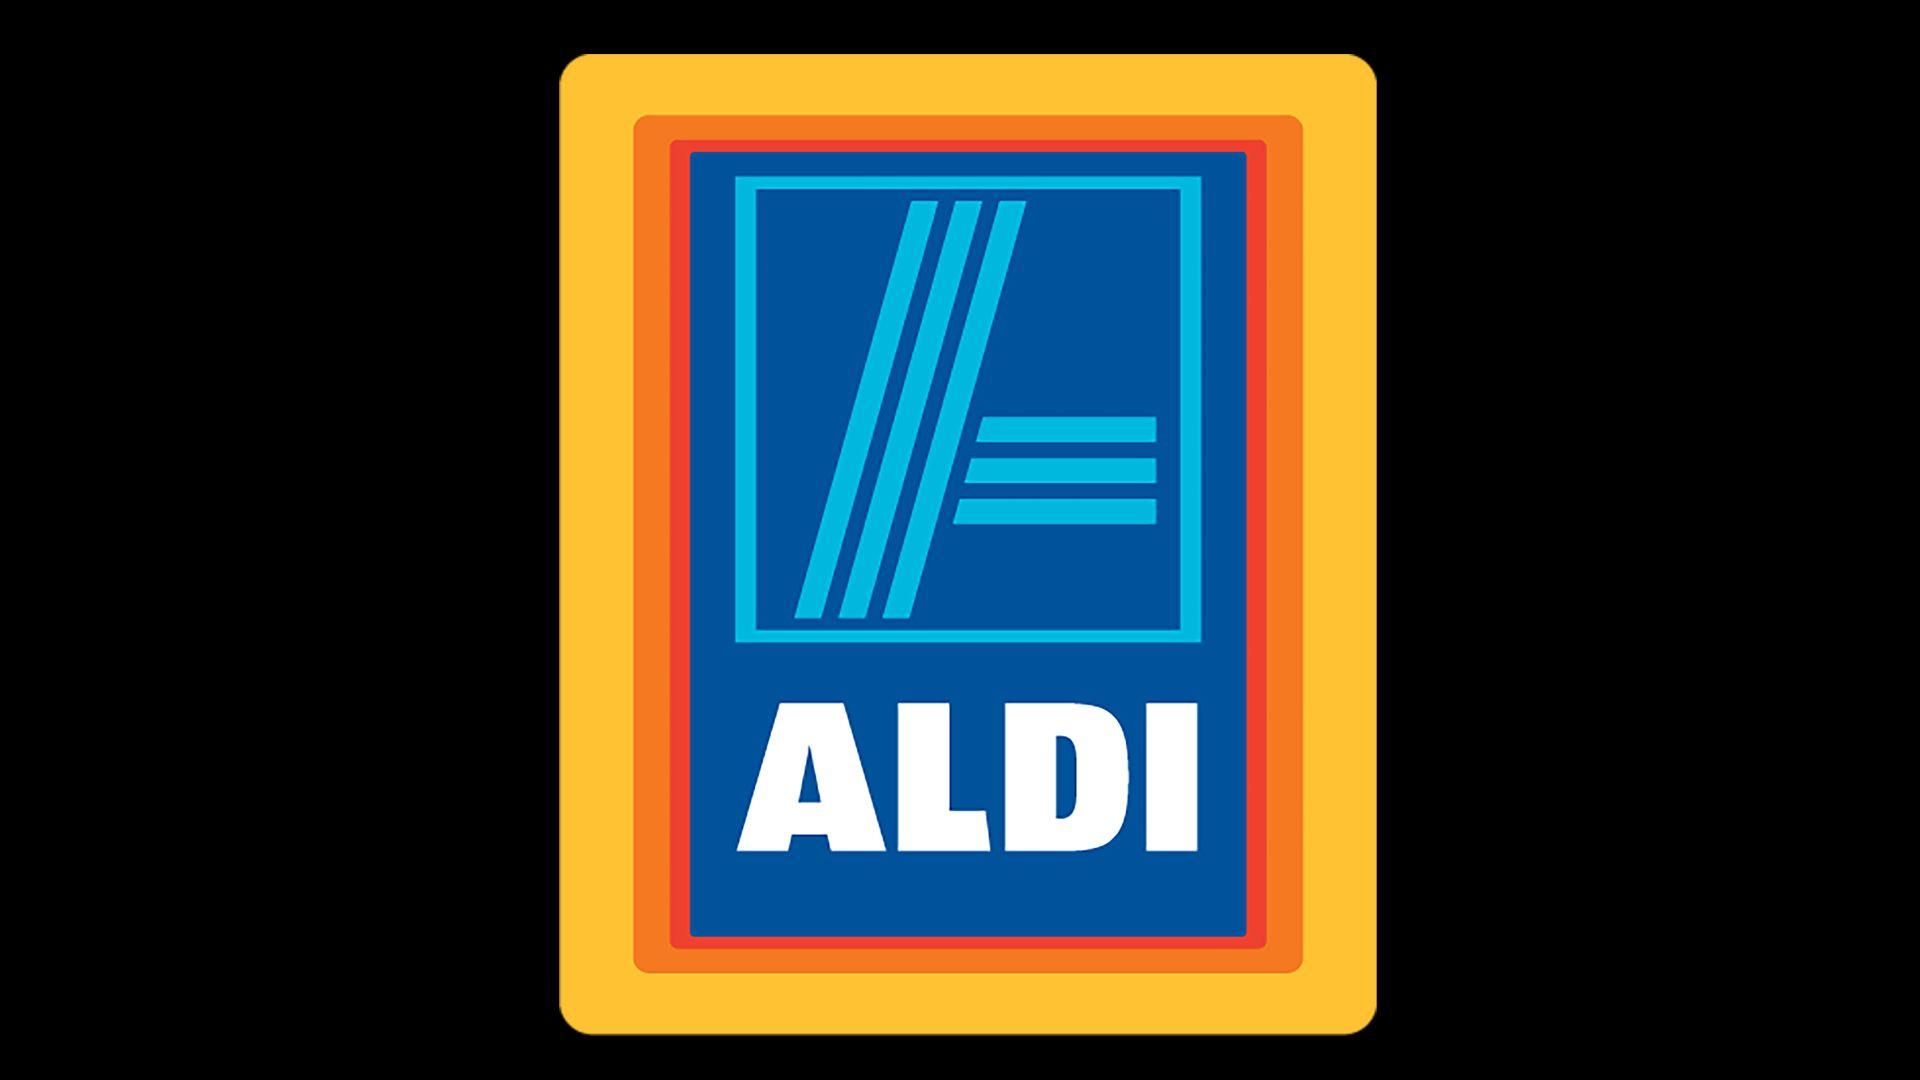 Aldi Logo - Aldi Logo, Aldi Symbol, Meaning, History and Evolution